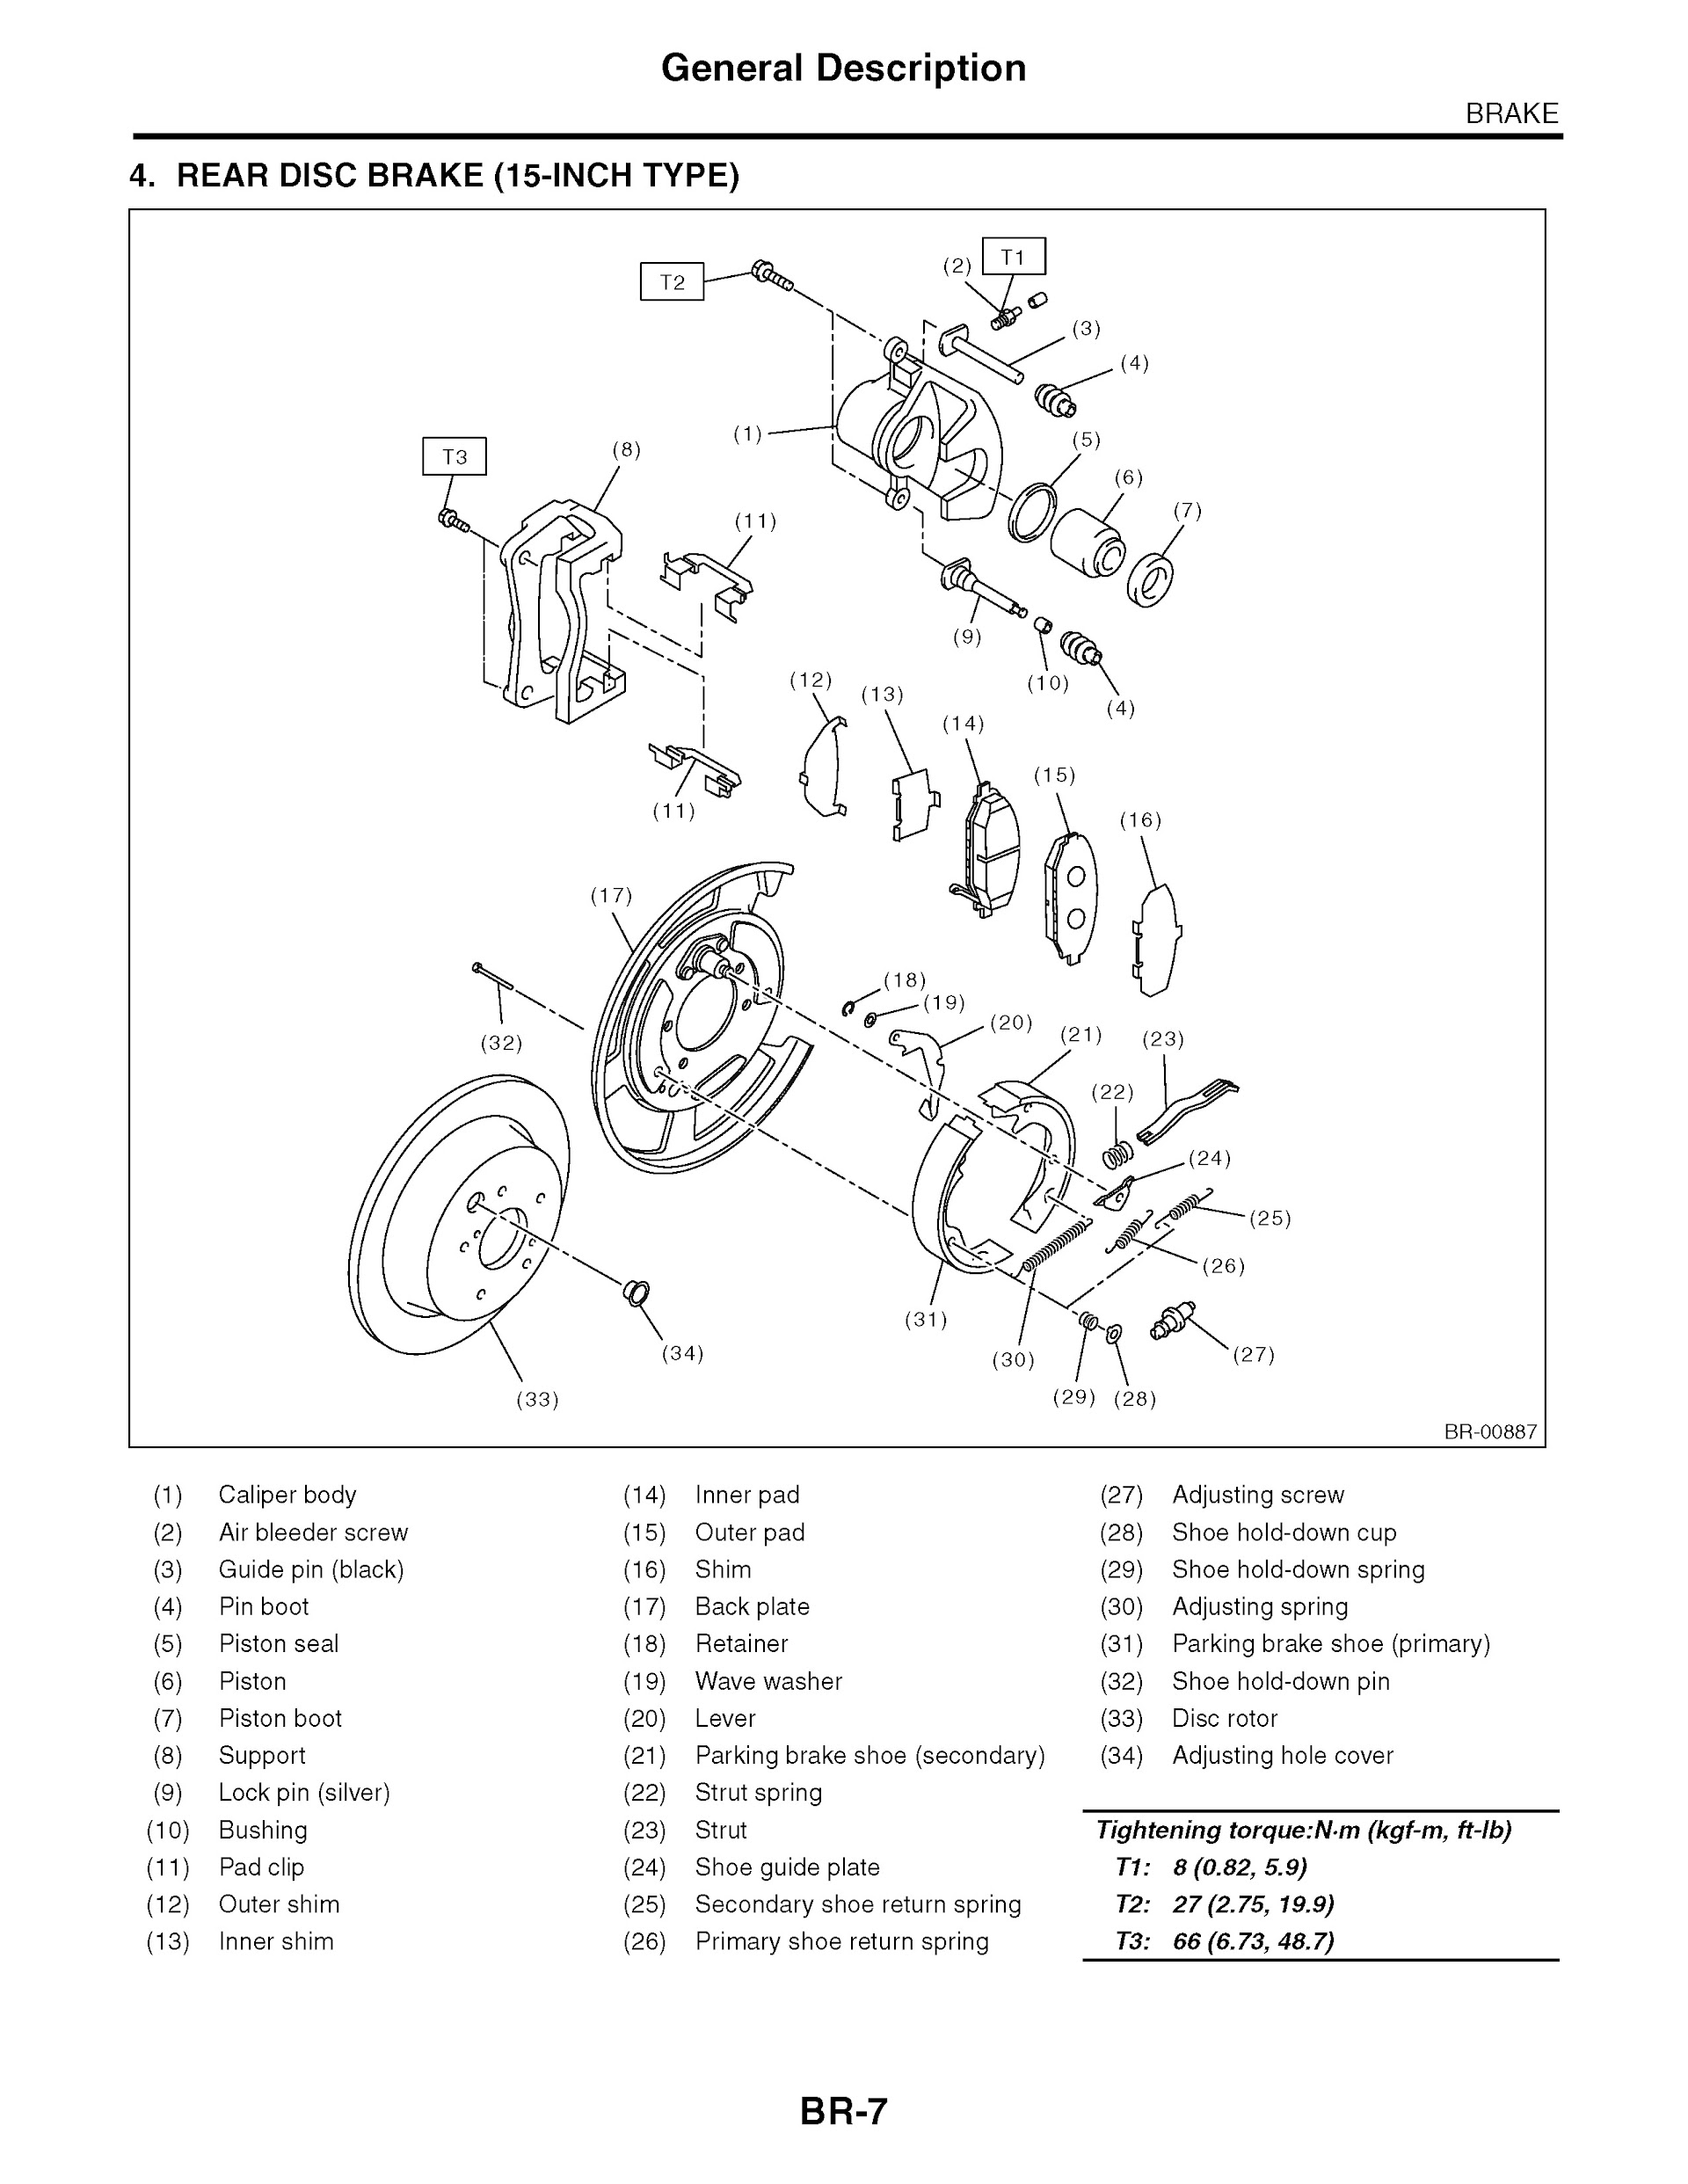 2012 Subaru Impreza Repair Manual, General Description